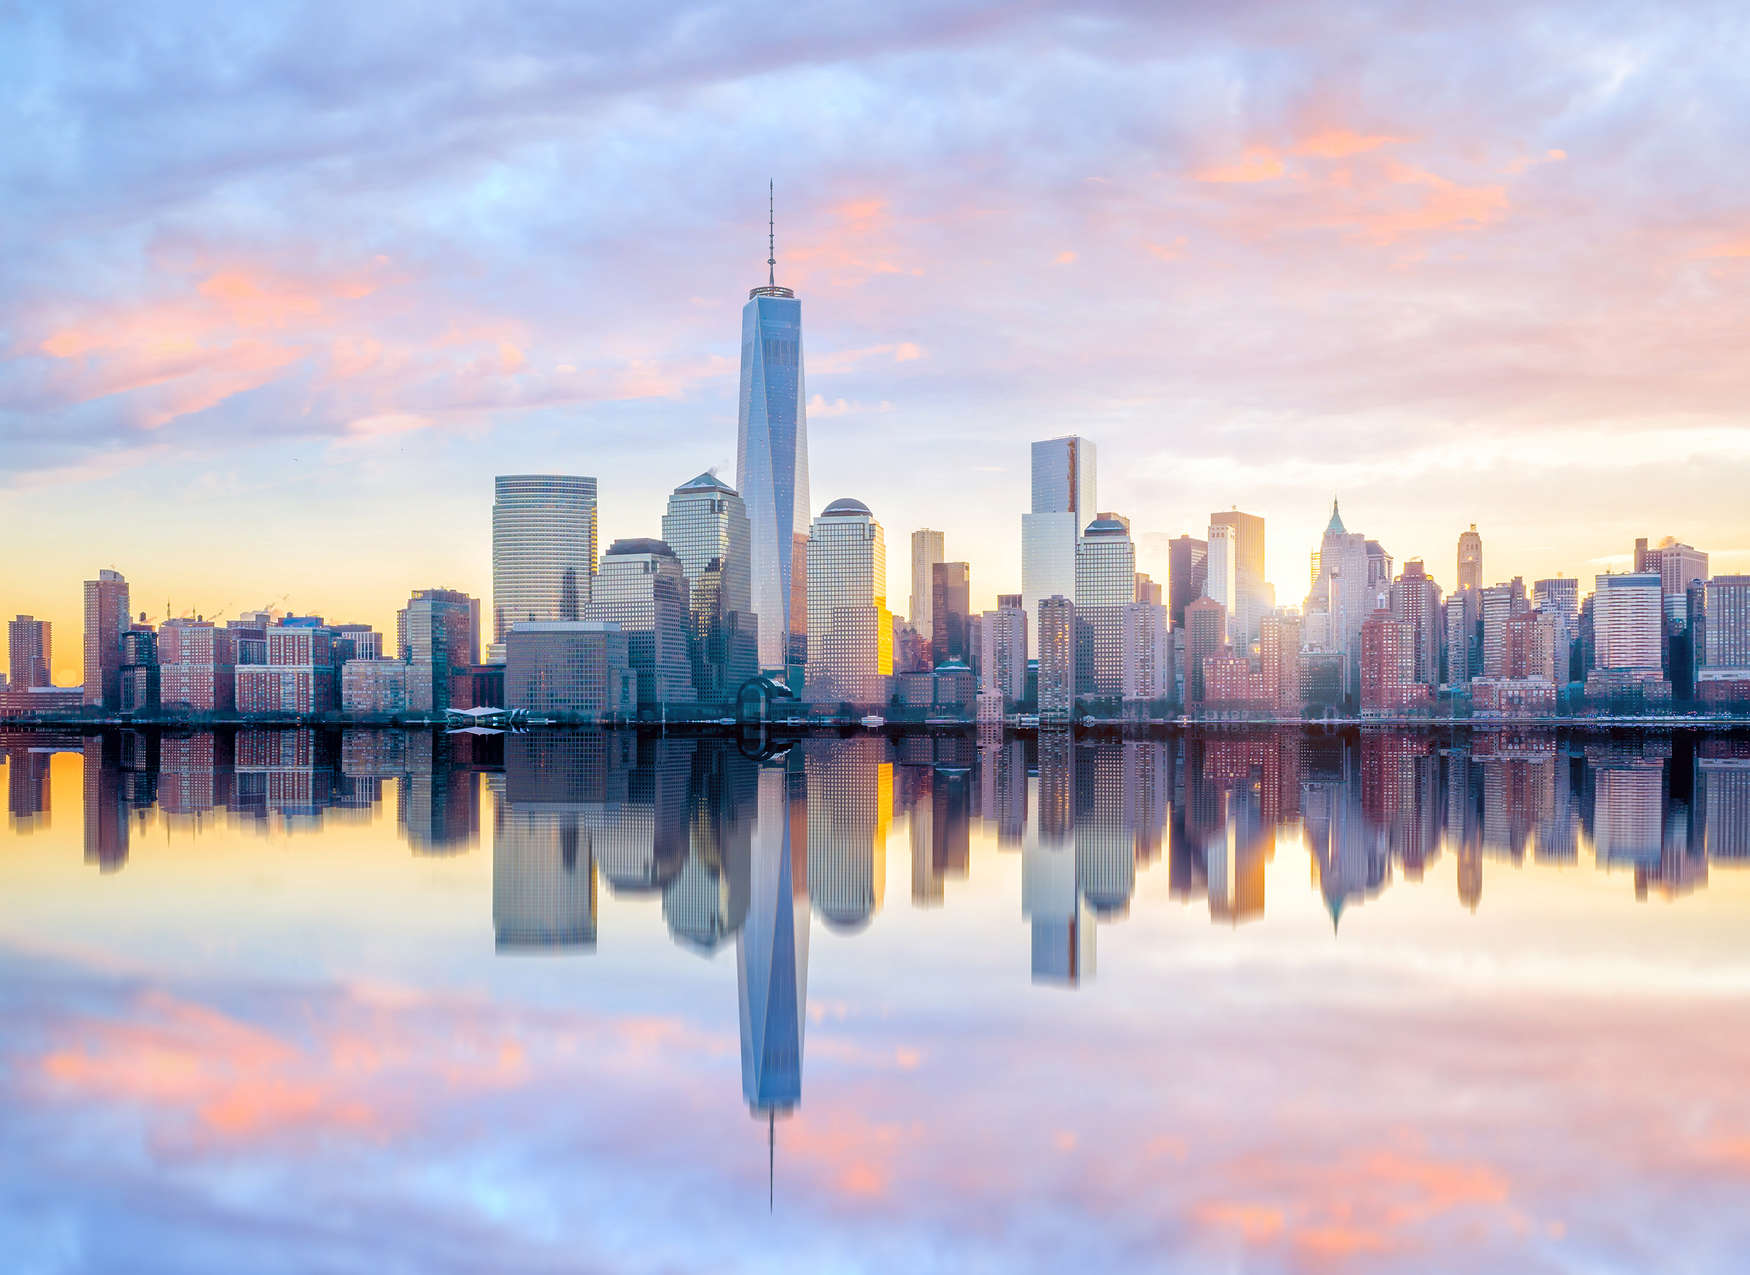             Fototapete New York Skyline am Morgen – Blau, Grau, Gelb
        